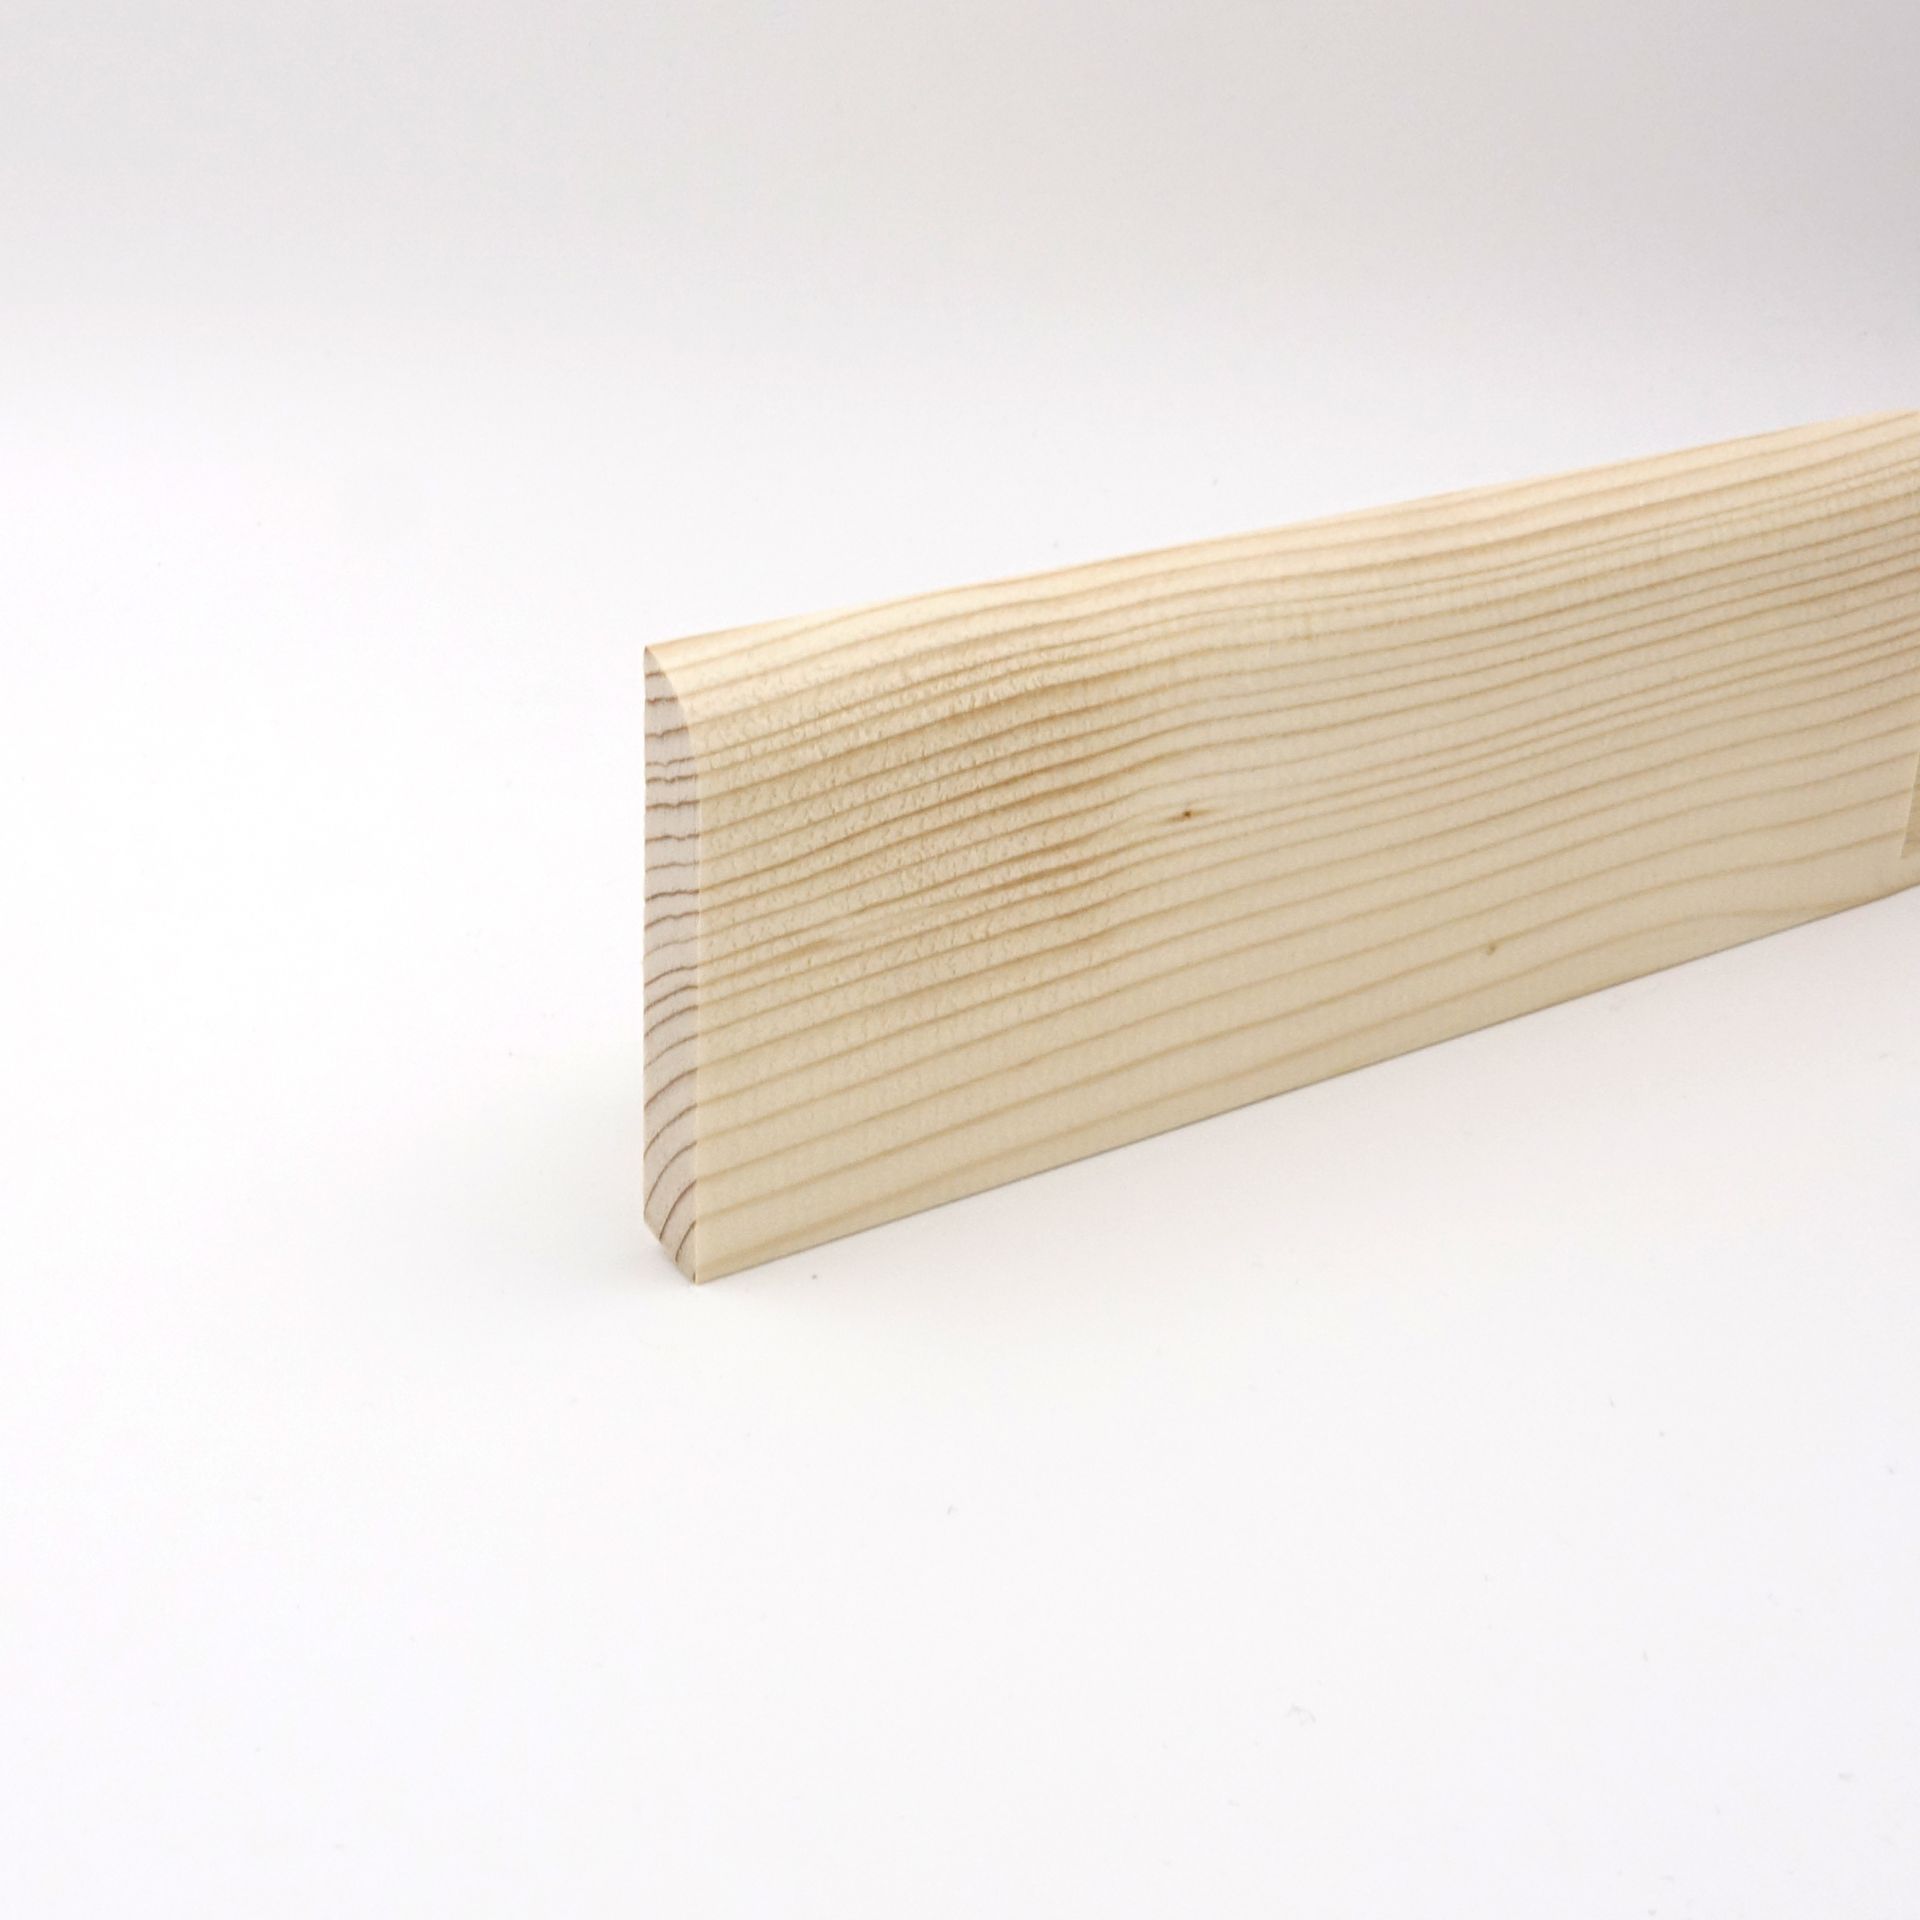 Sockelleiste Modern flach Fichte roh  (10 Stück) - 1,2 x 7 x 240 cm